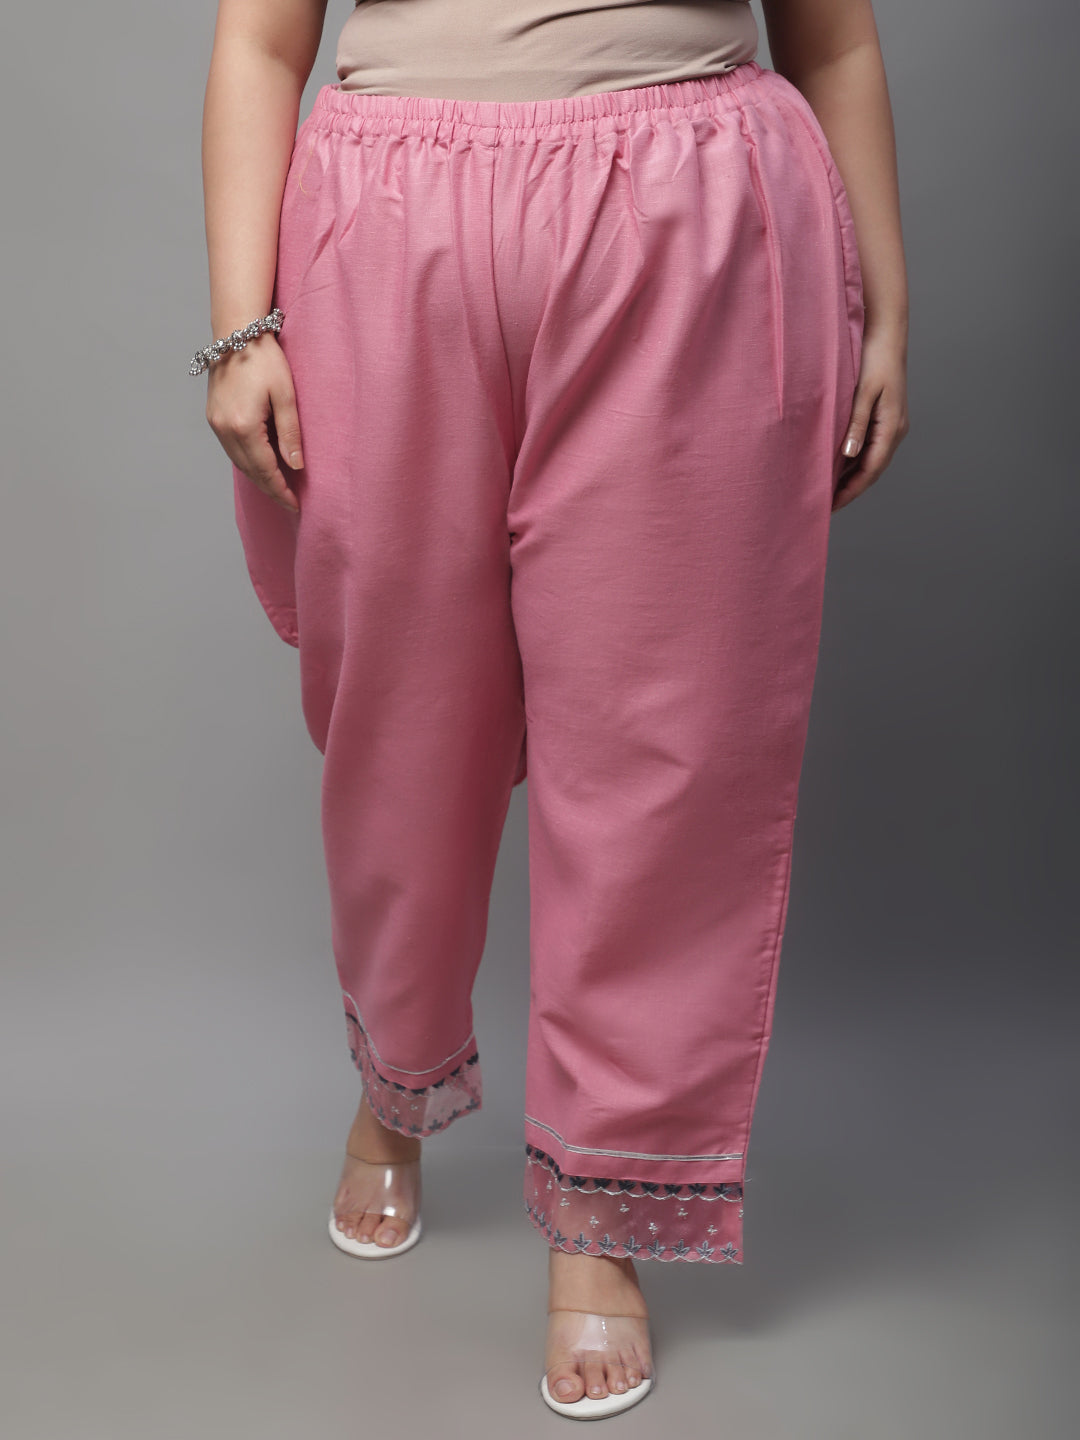 THEORY M 100% raw Silk pants slacks trousers $295 drawstring elastic w –  Jenifers Designer Closet